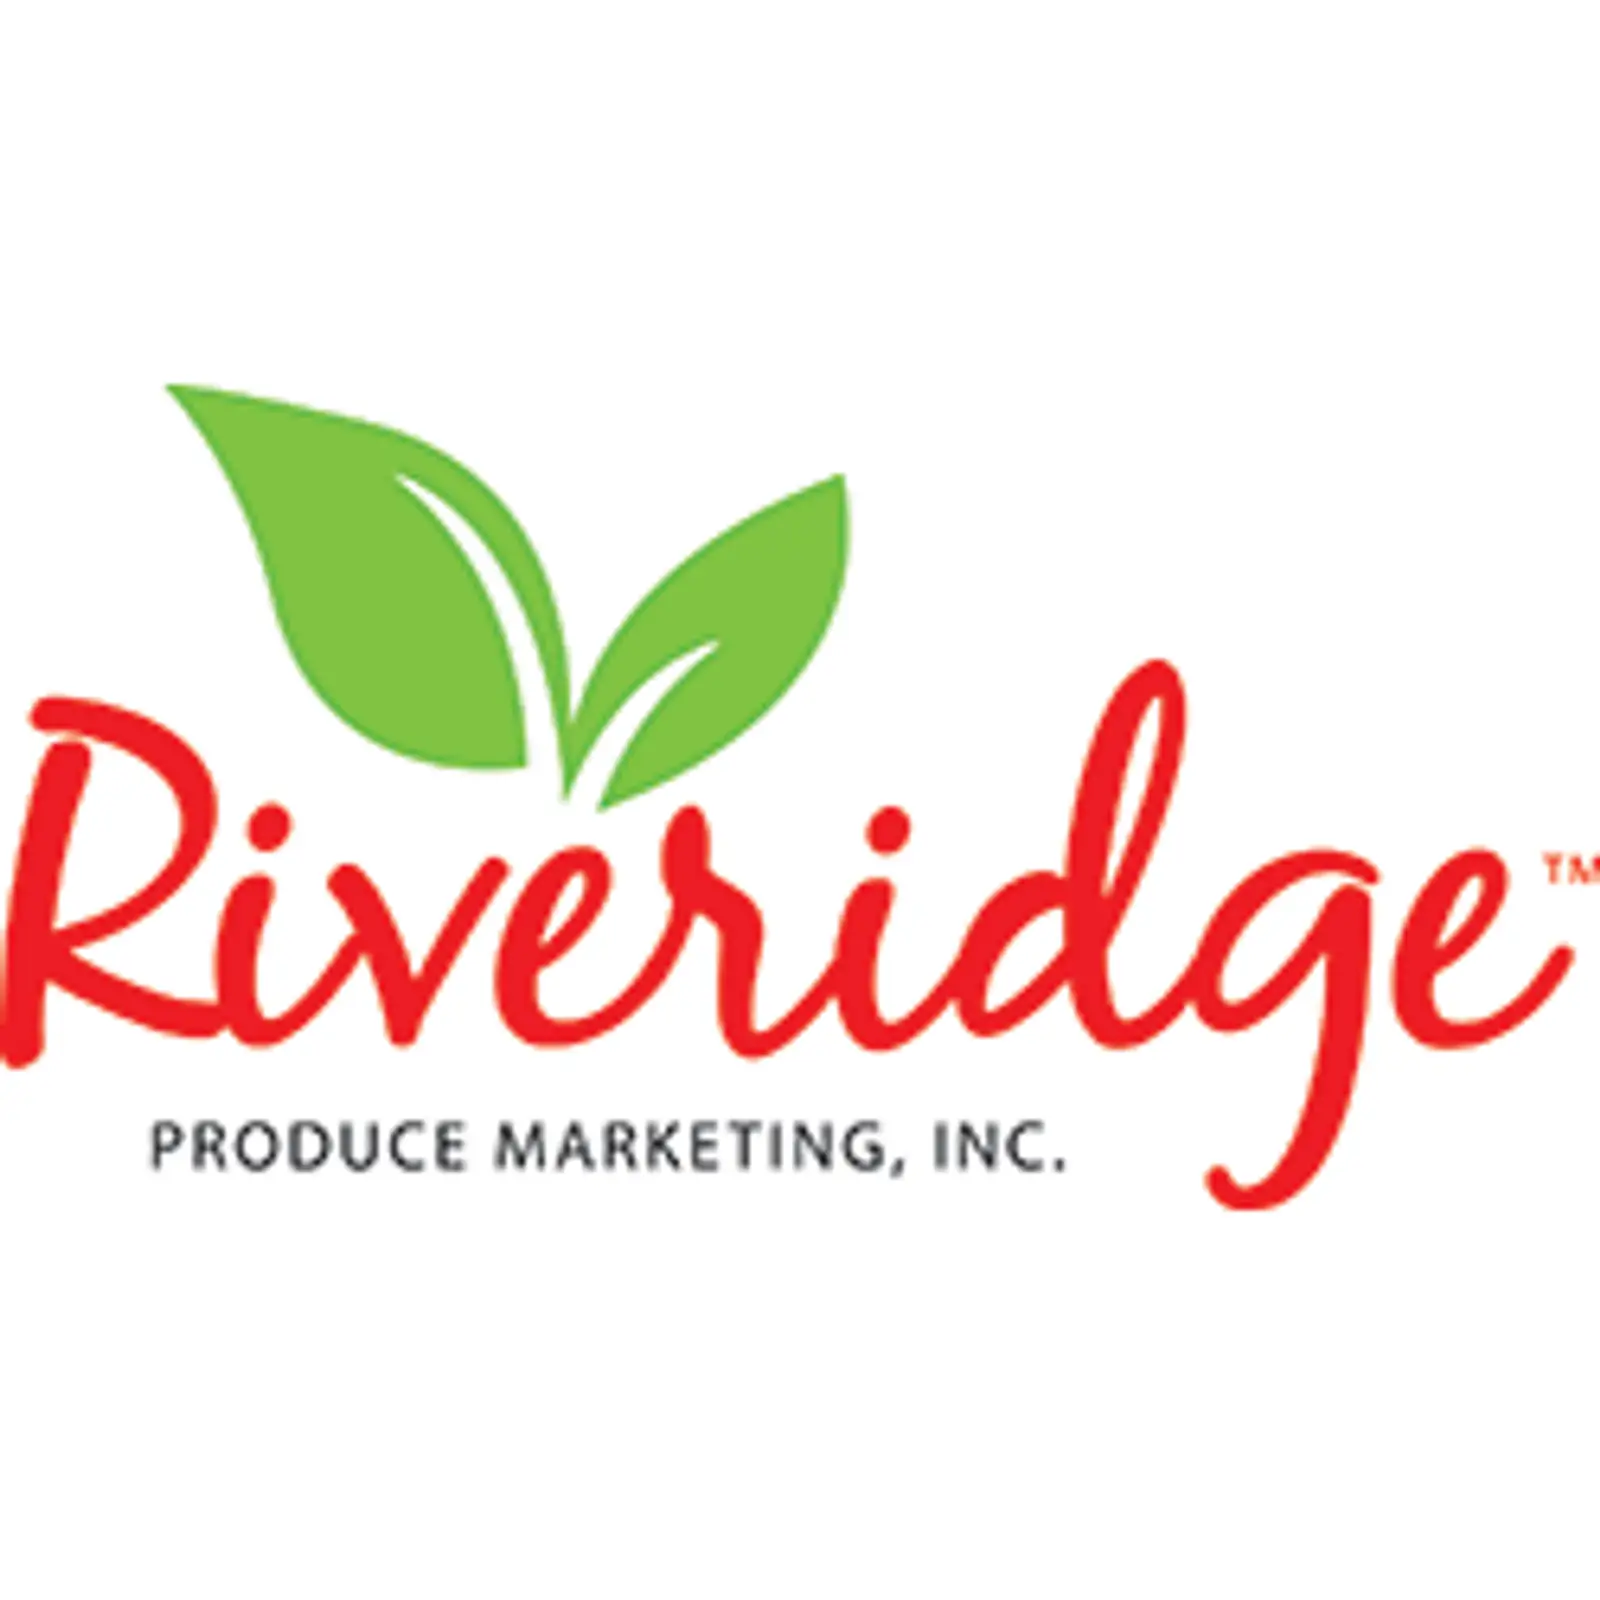 Riveridge Produce Marketing, Inc logo